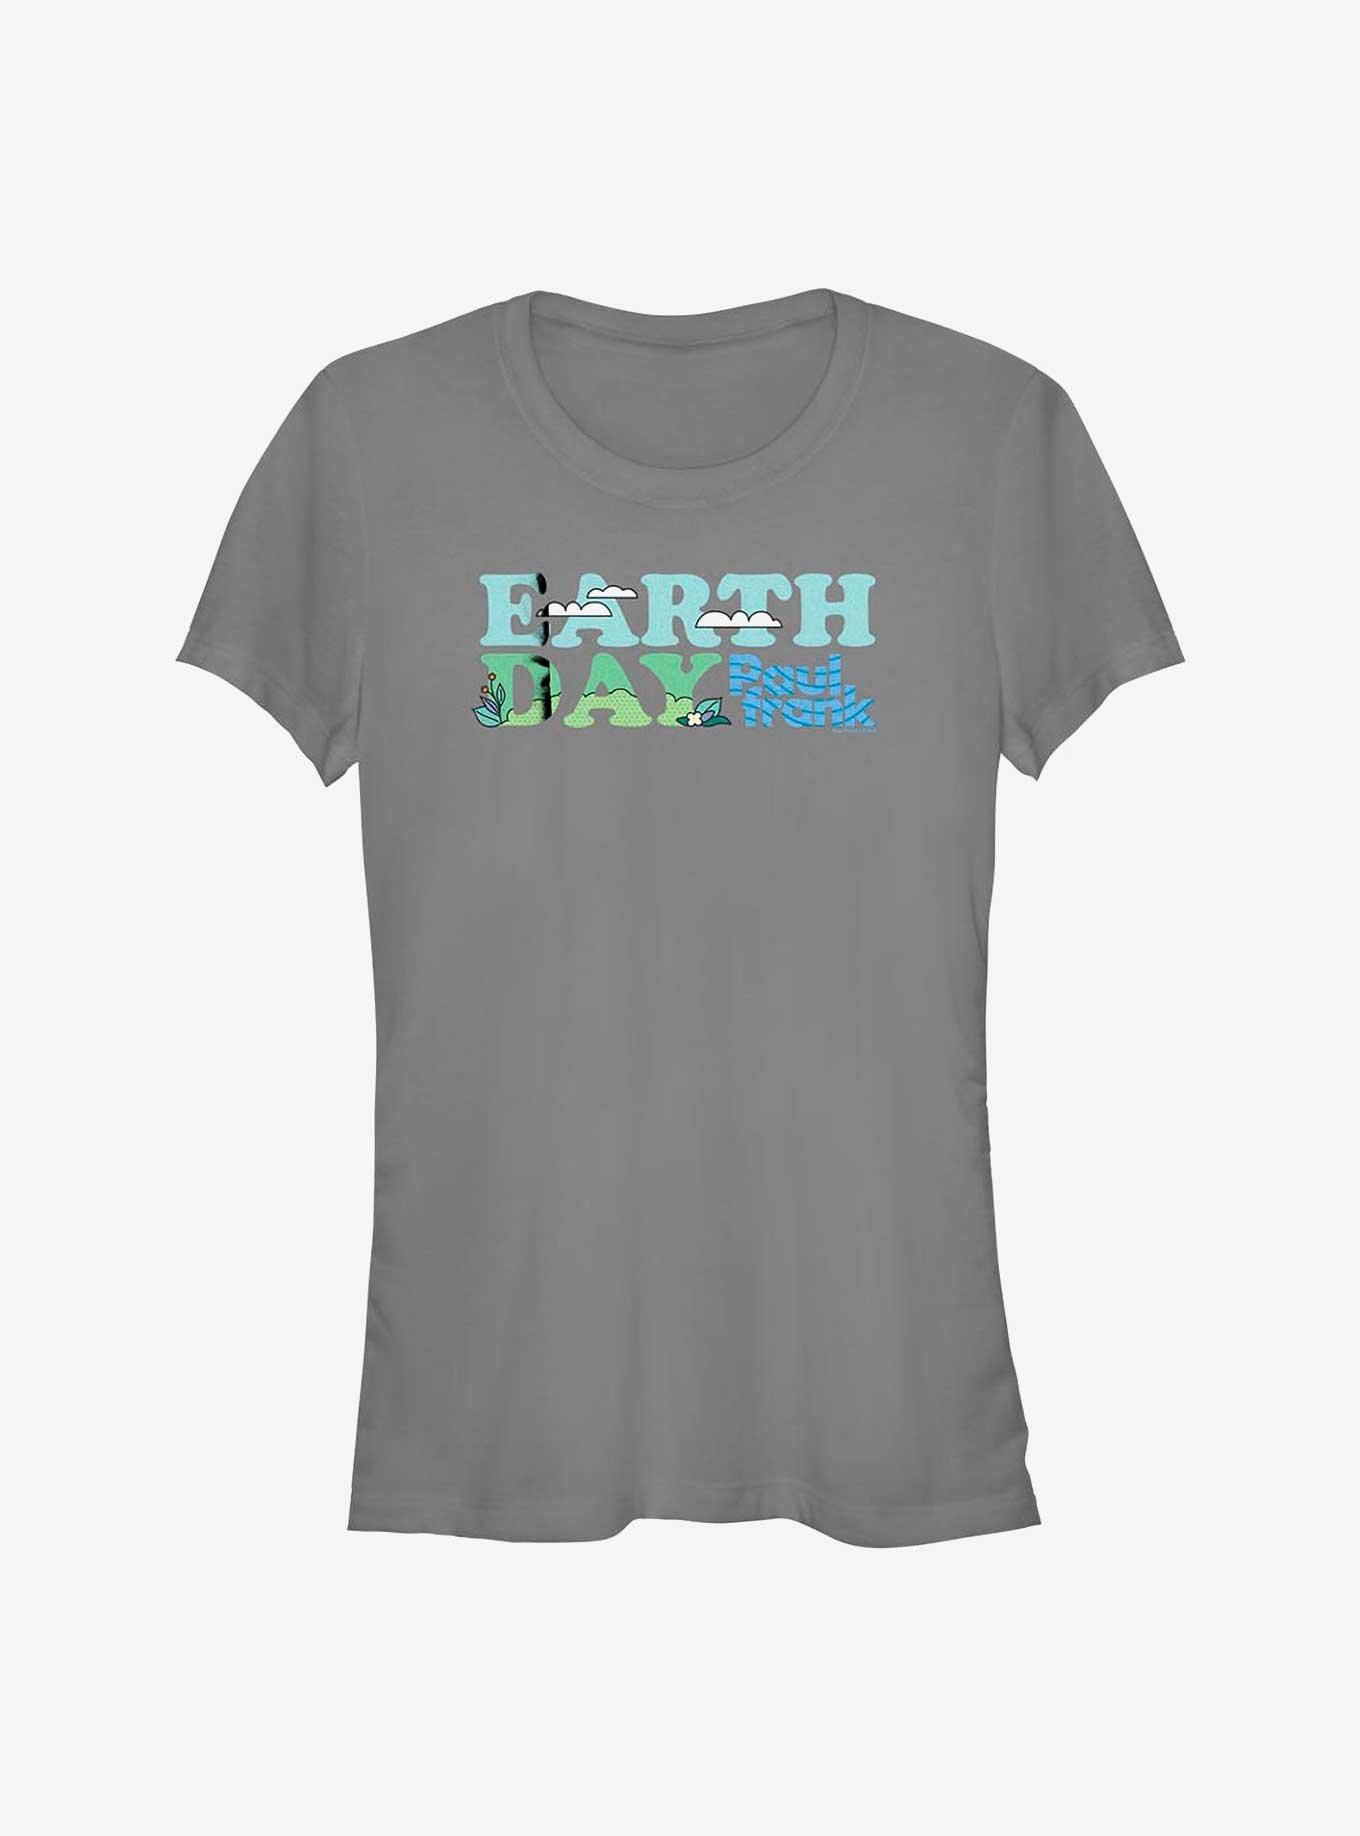 Paul Frank Earth Day Girls T-Shirt, CHARCOAL, hi-res